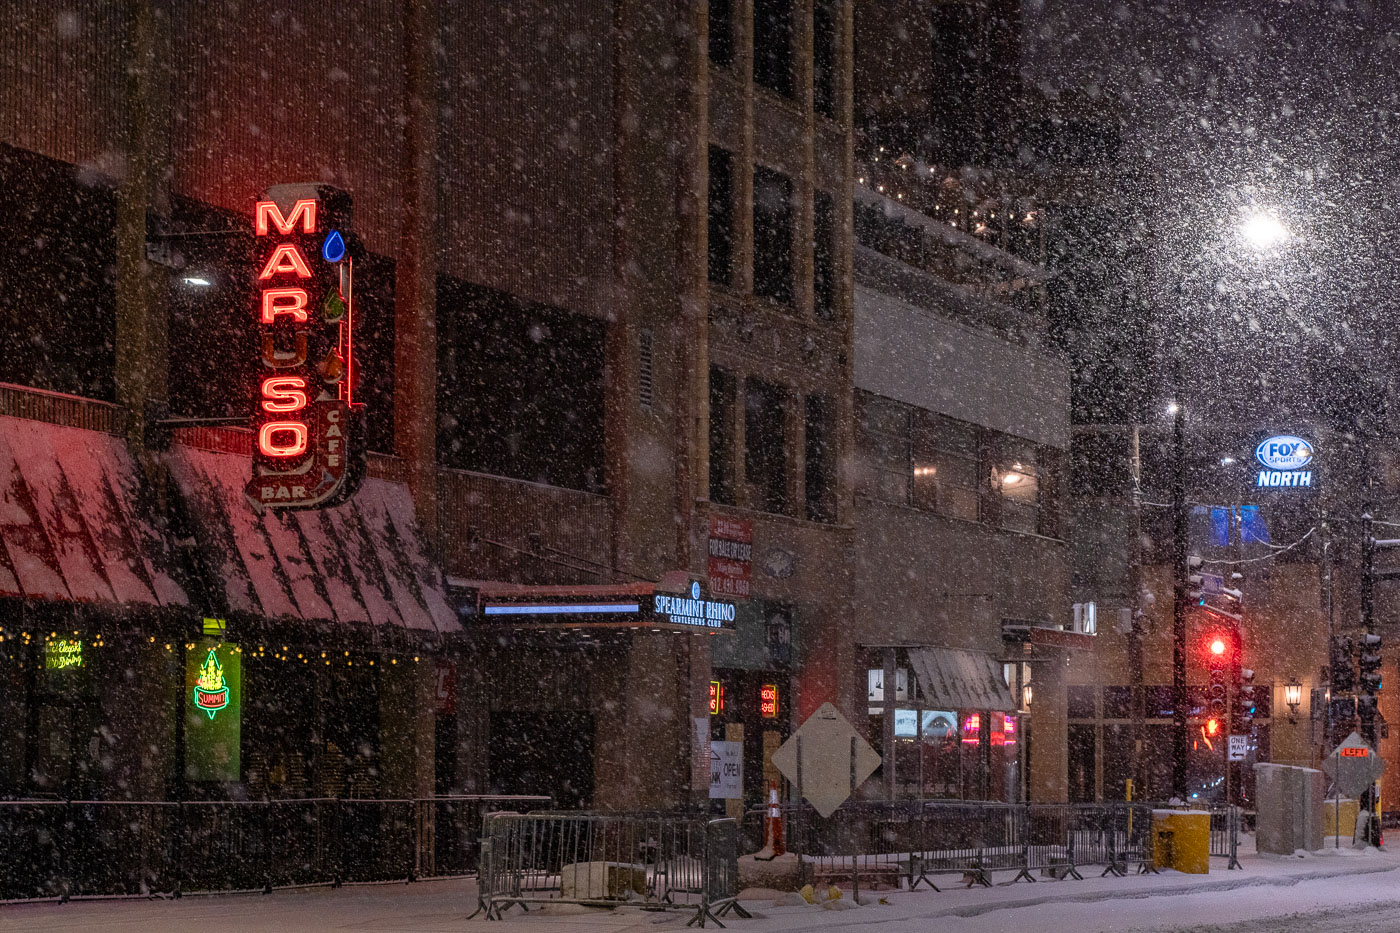 Maruso bar in Downtown Minneapolis during snowfall